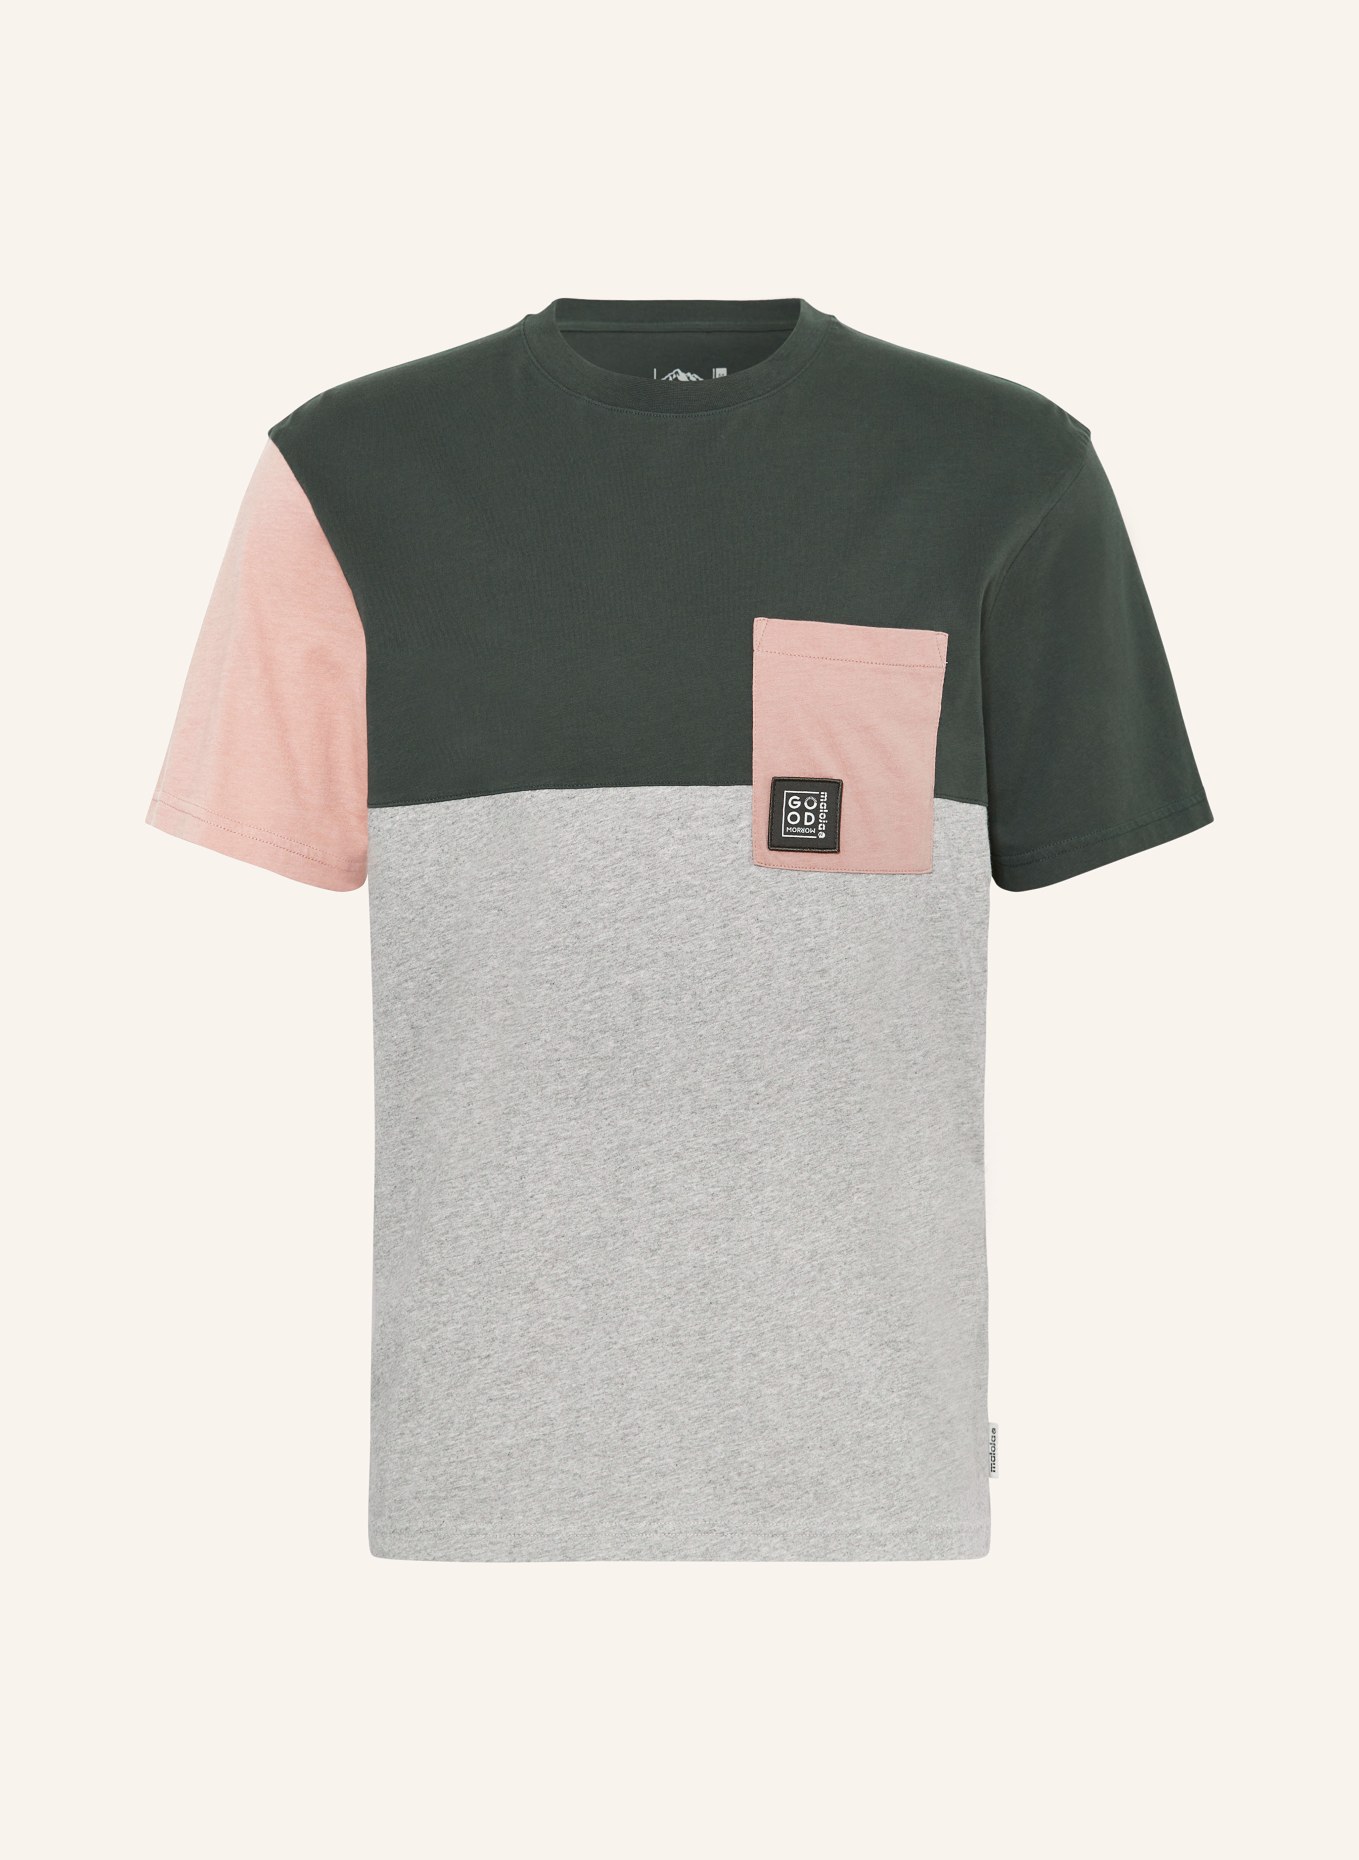 maloja T-Shirt SILSERM., Farbe: GRÜN/ GRAU/ HELLROT (Bild 1)